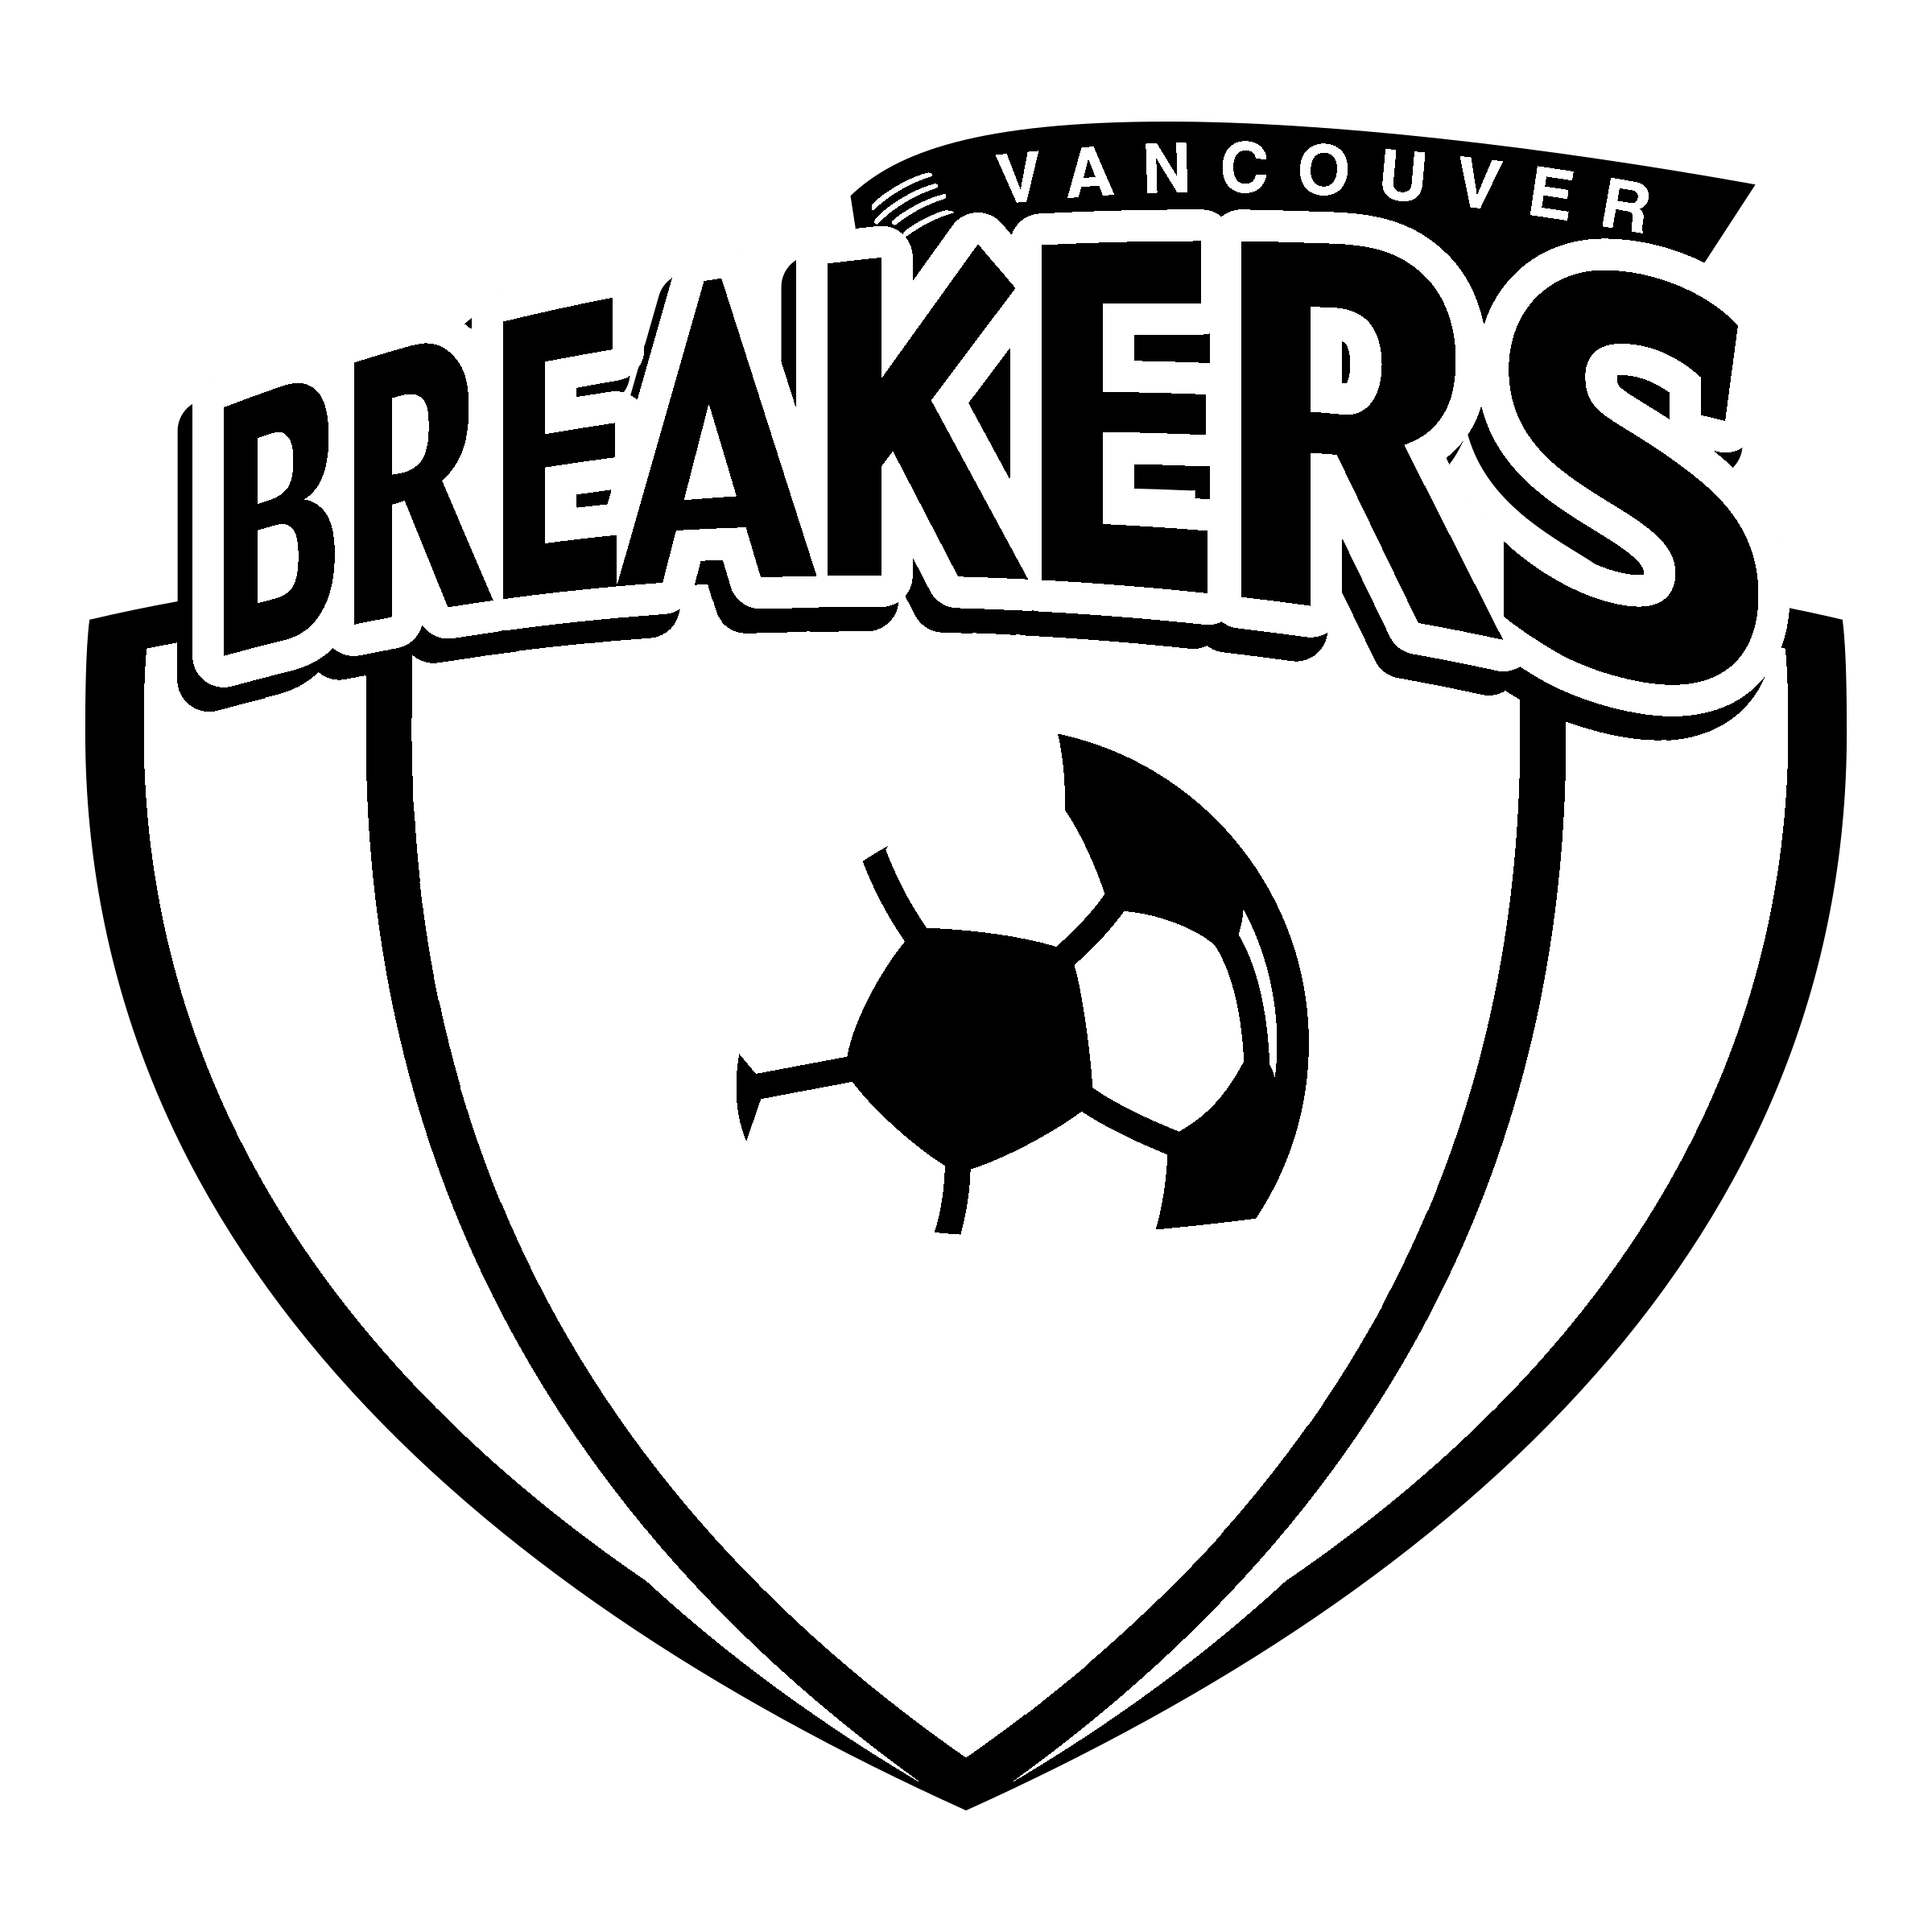 Breakers Logo - Vancouver Breakers Logo PNG Transparent & SVG Vector - Freebie Supply